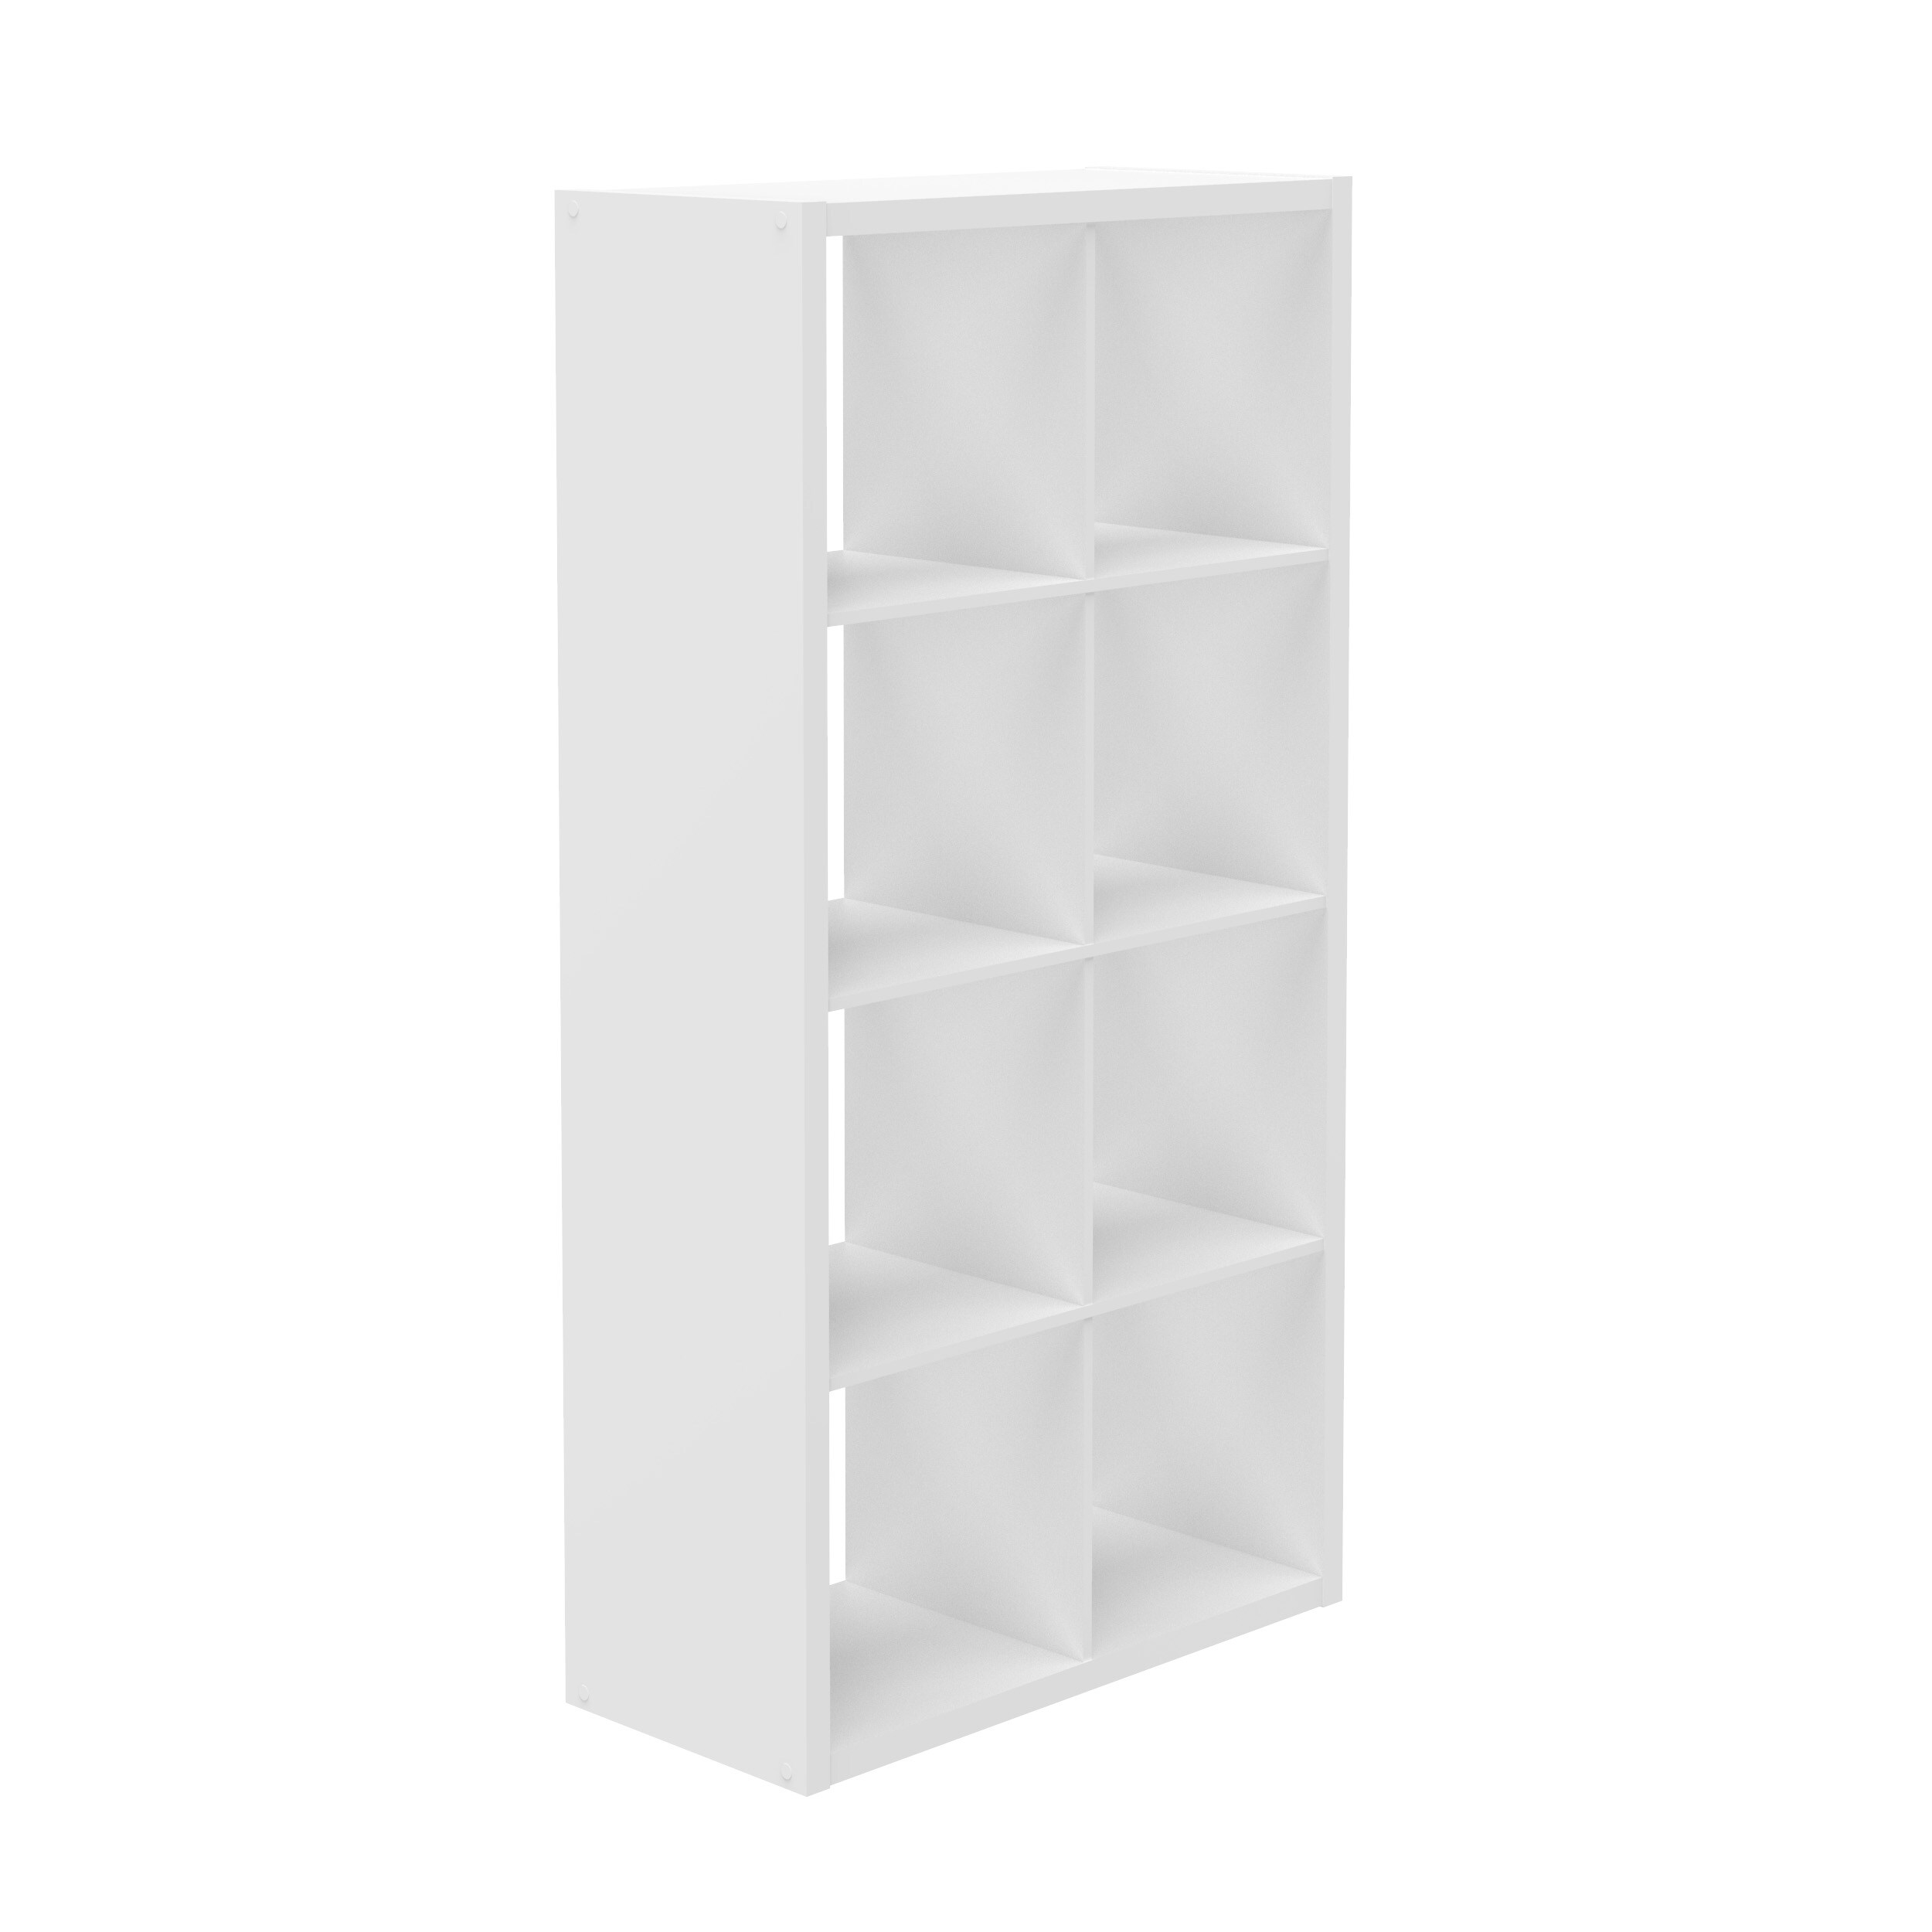 3 Tier Bookcase  6 Cubes Storage Cabinet Shelf Organizer Unit Display Black 